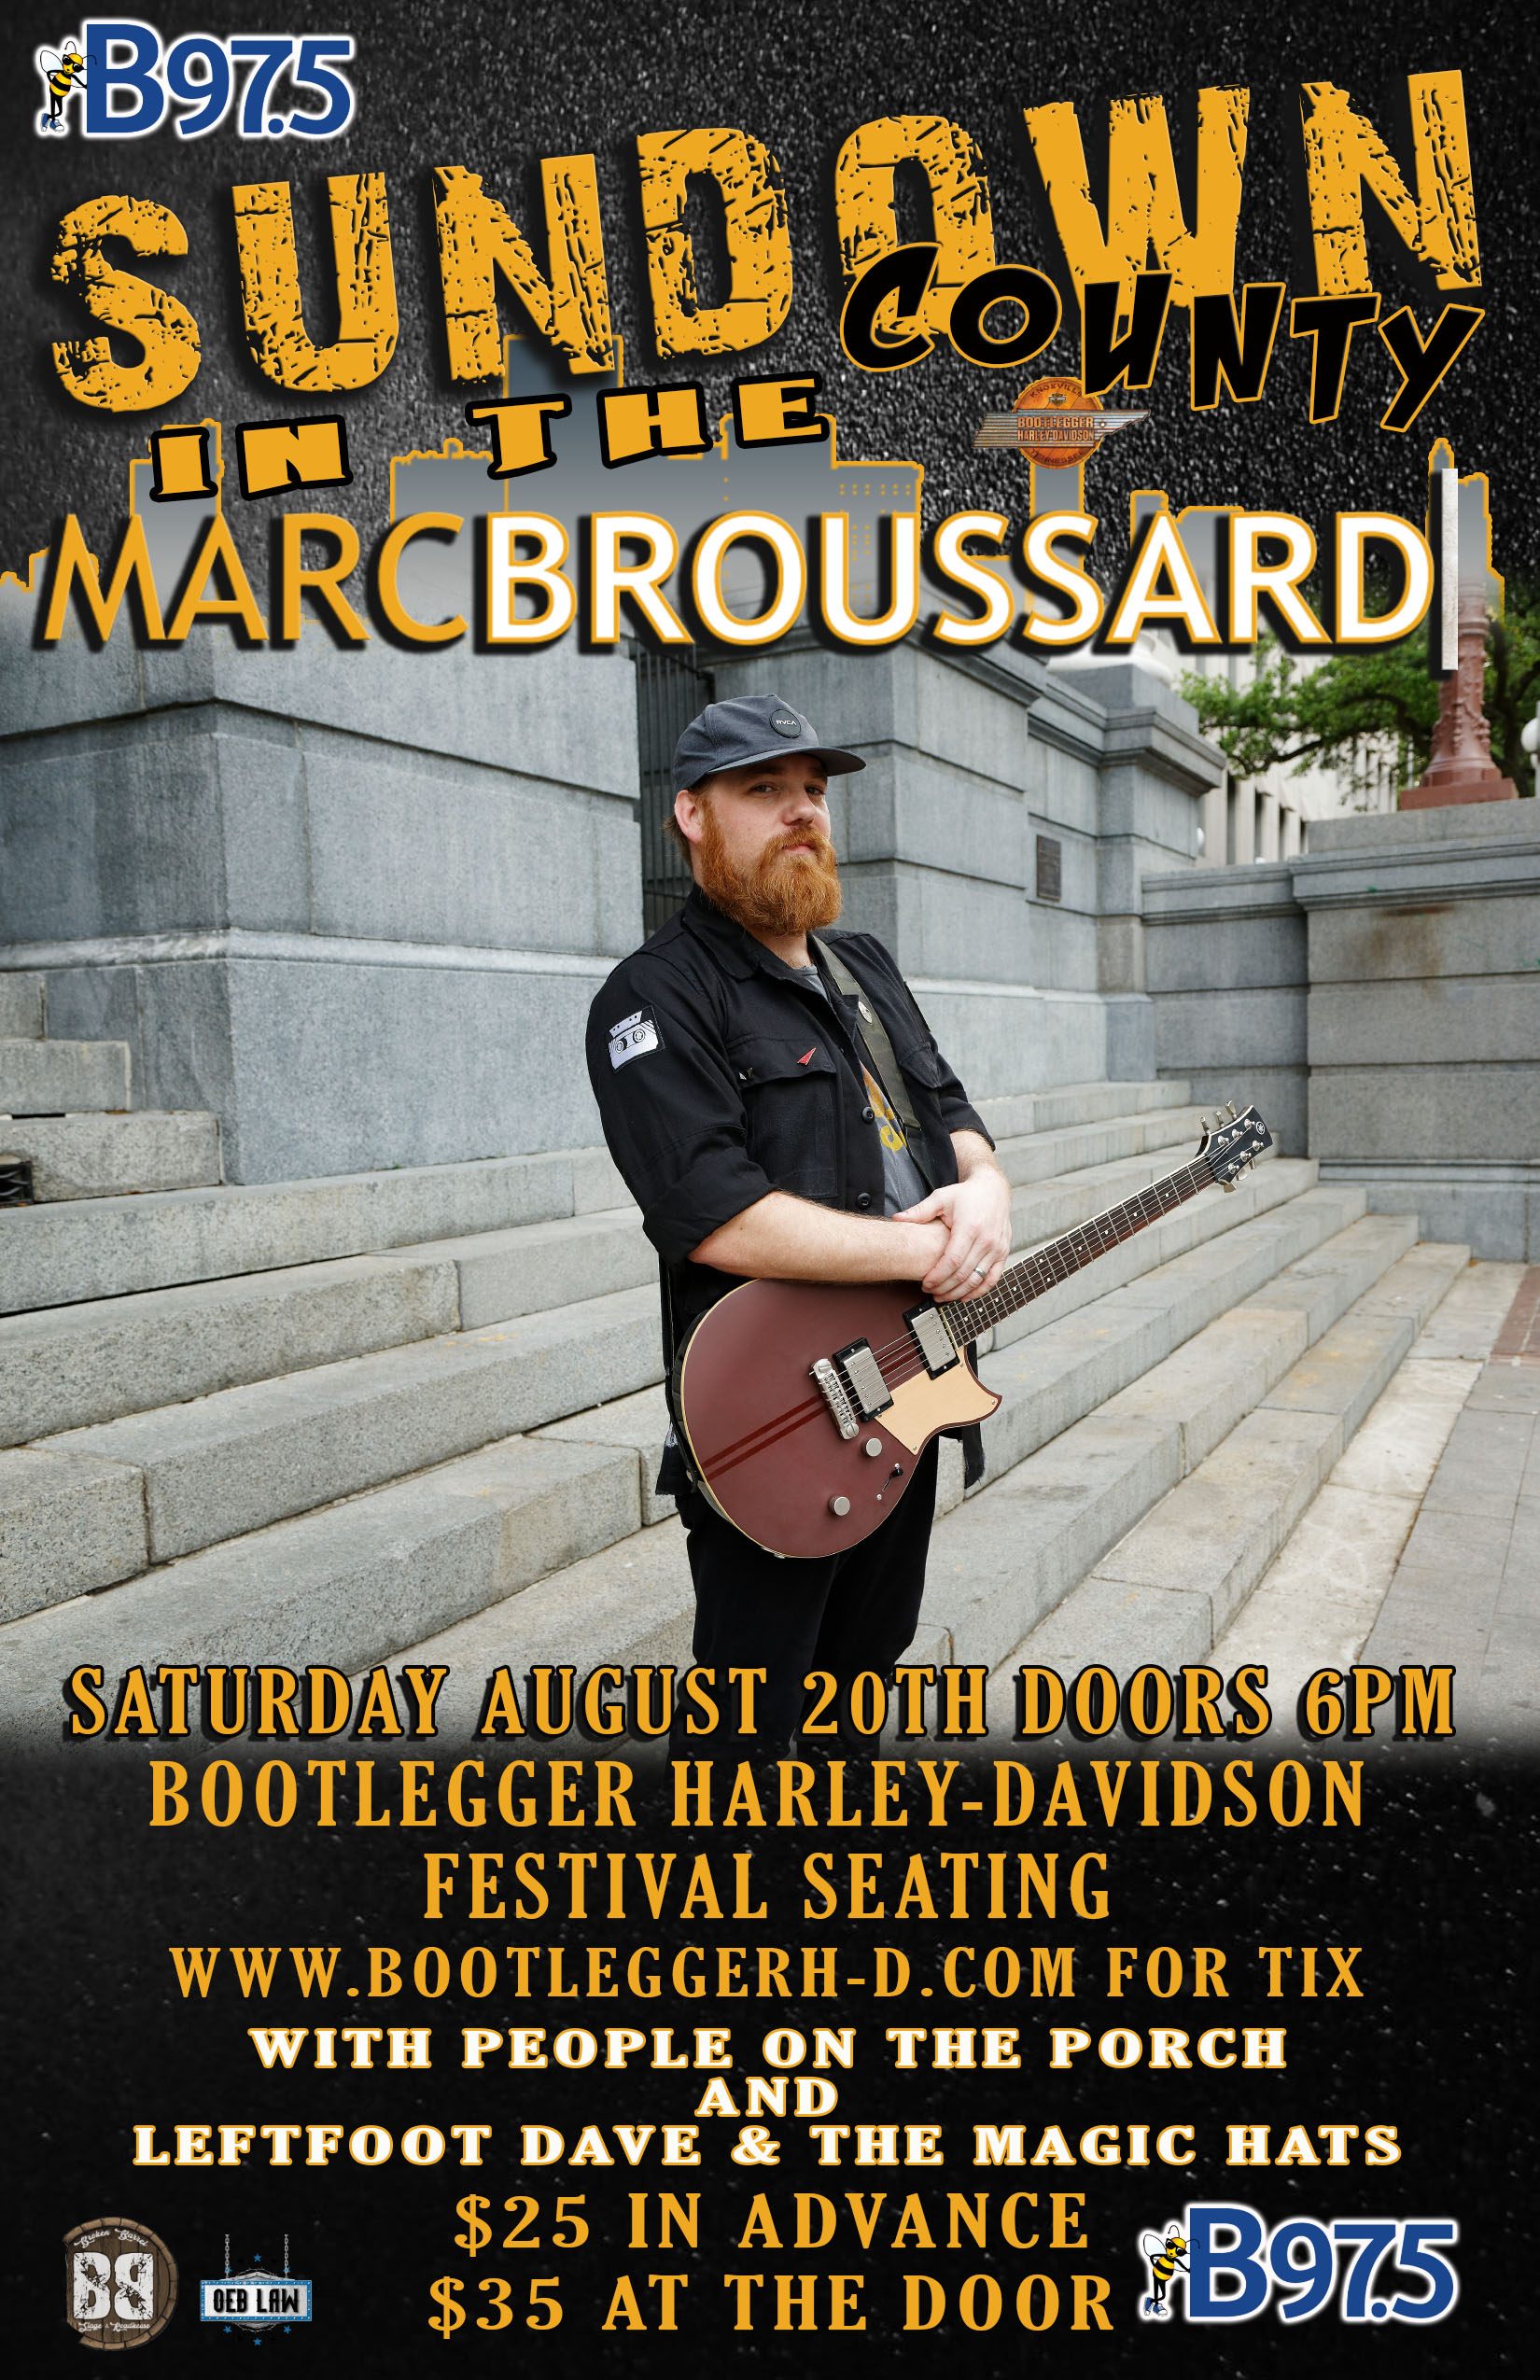 Marc Broussard in concert at Bootlegger Harley-Davidson